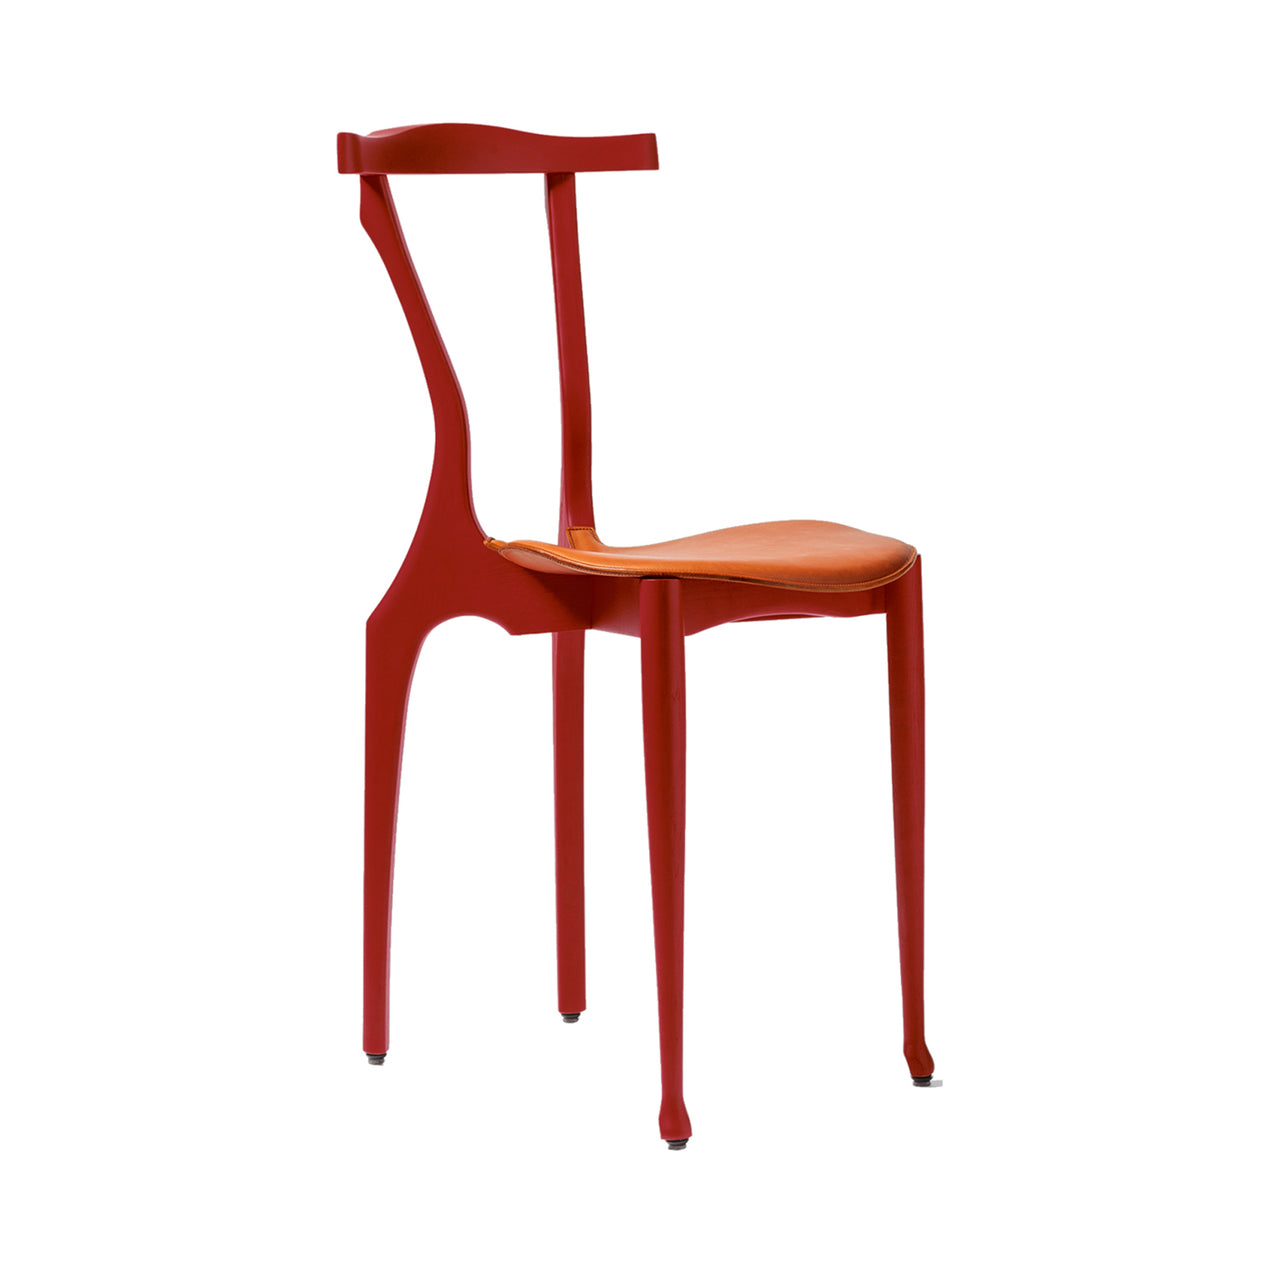 Gaulinetta Chair: Coral Red